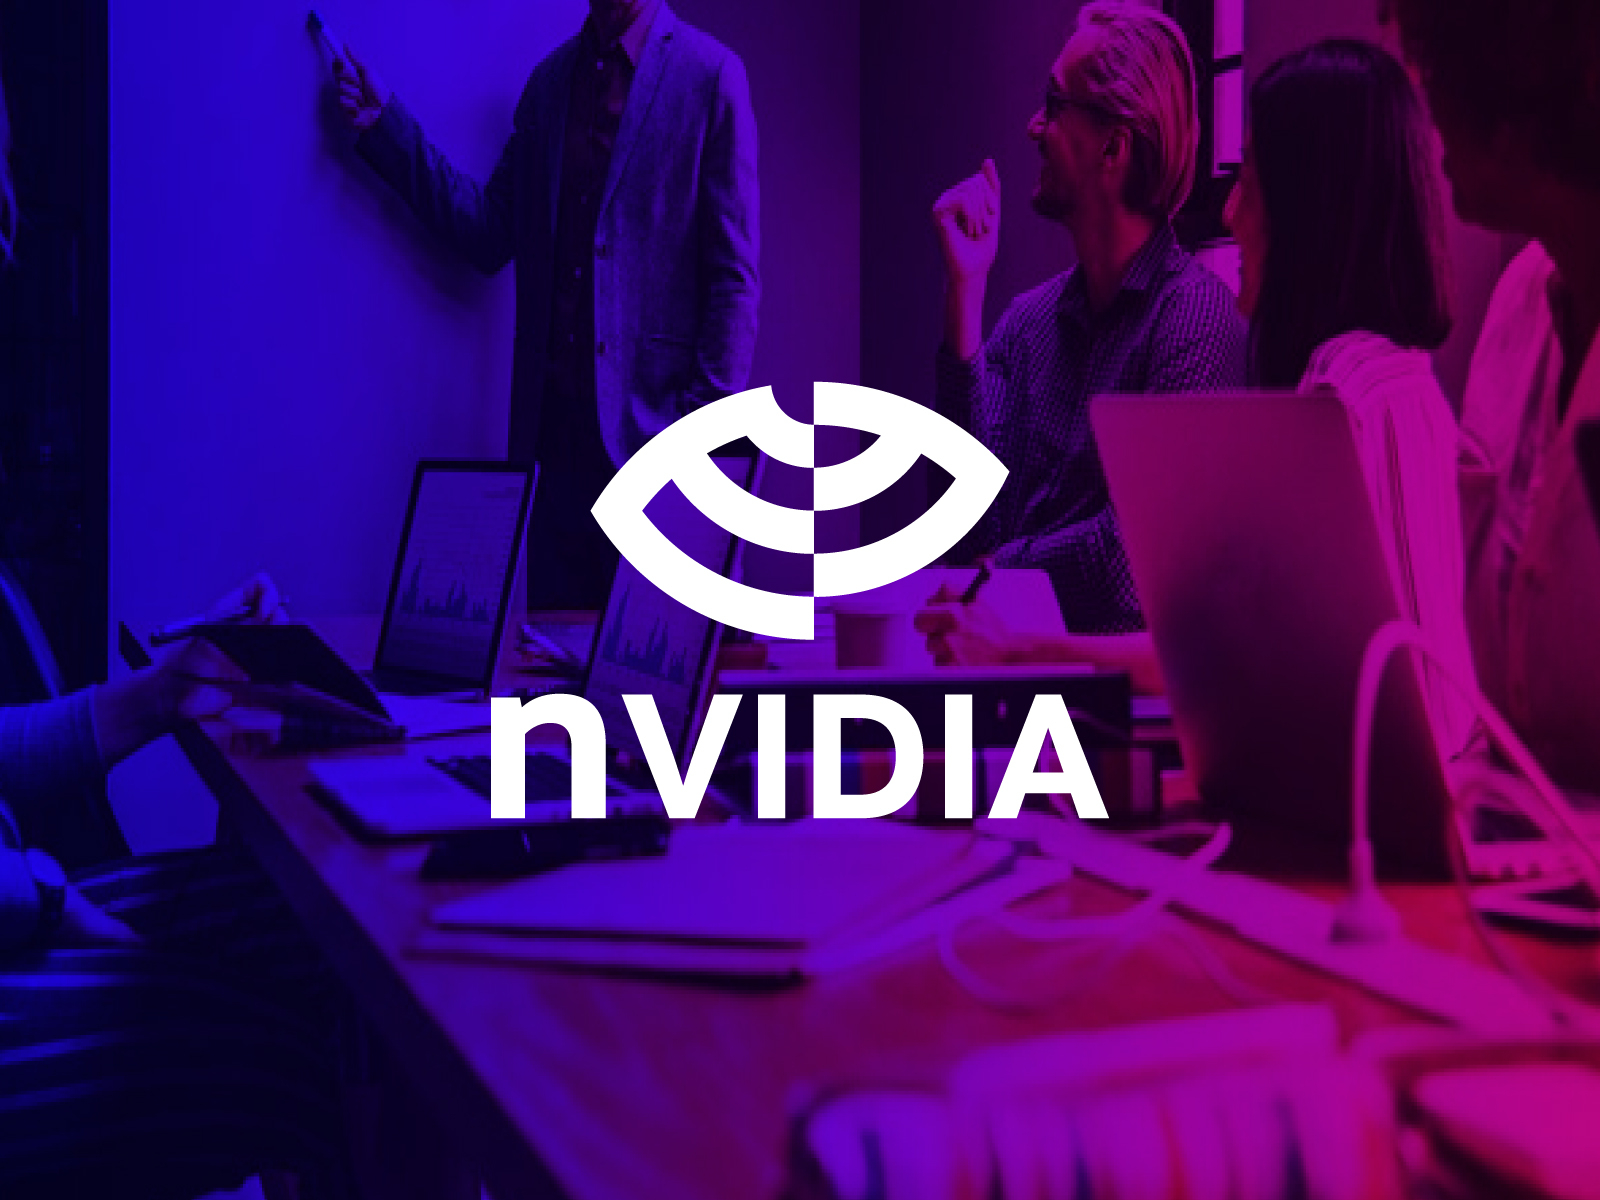 nvidia logo redesign concept by Jishan - Branding Agency on Dribbble